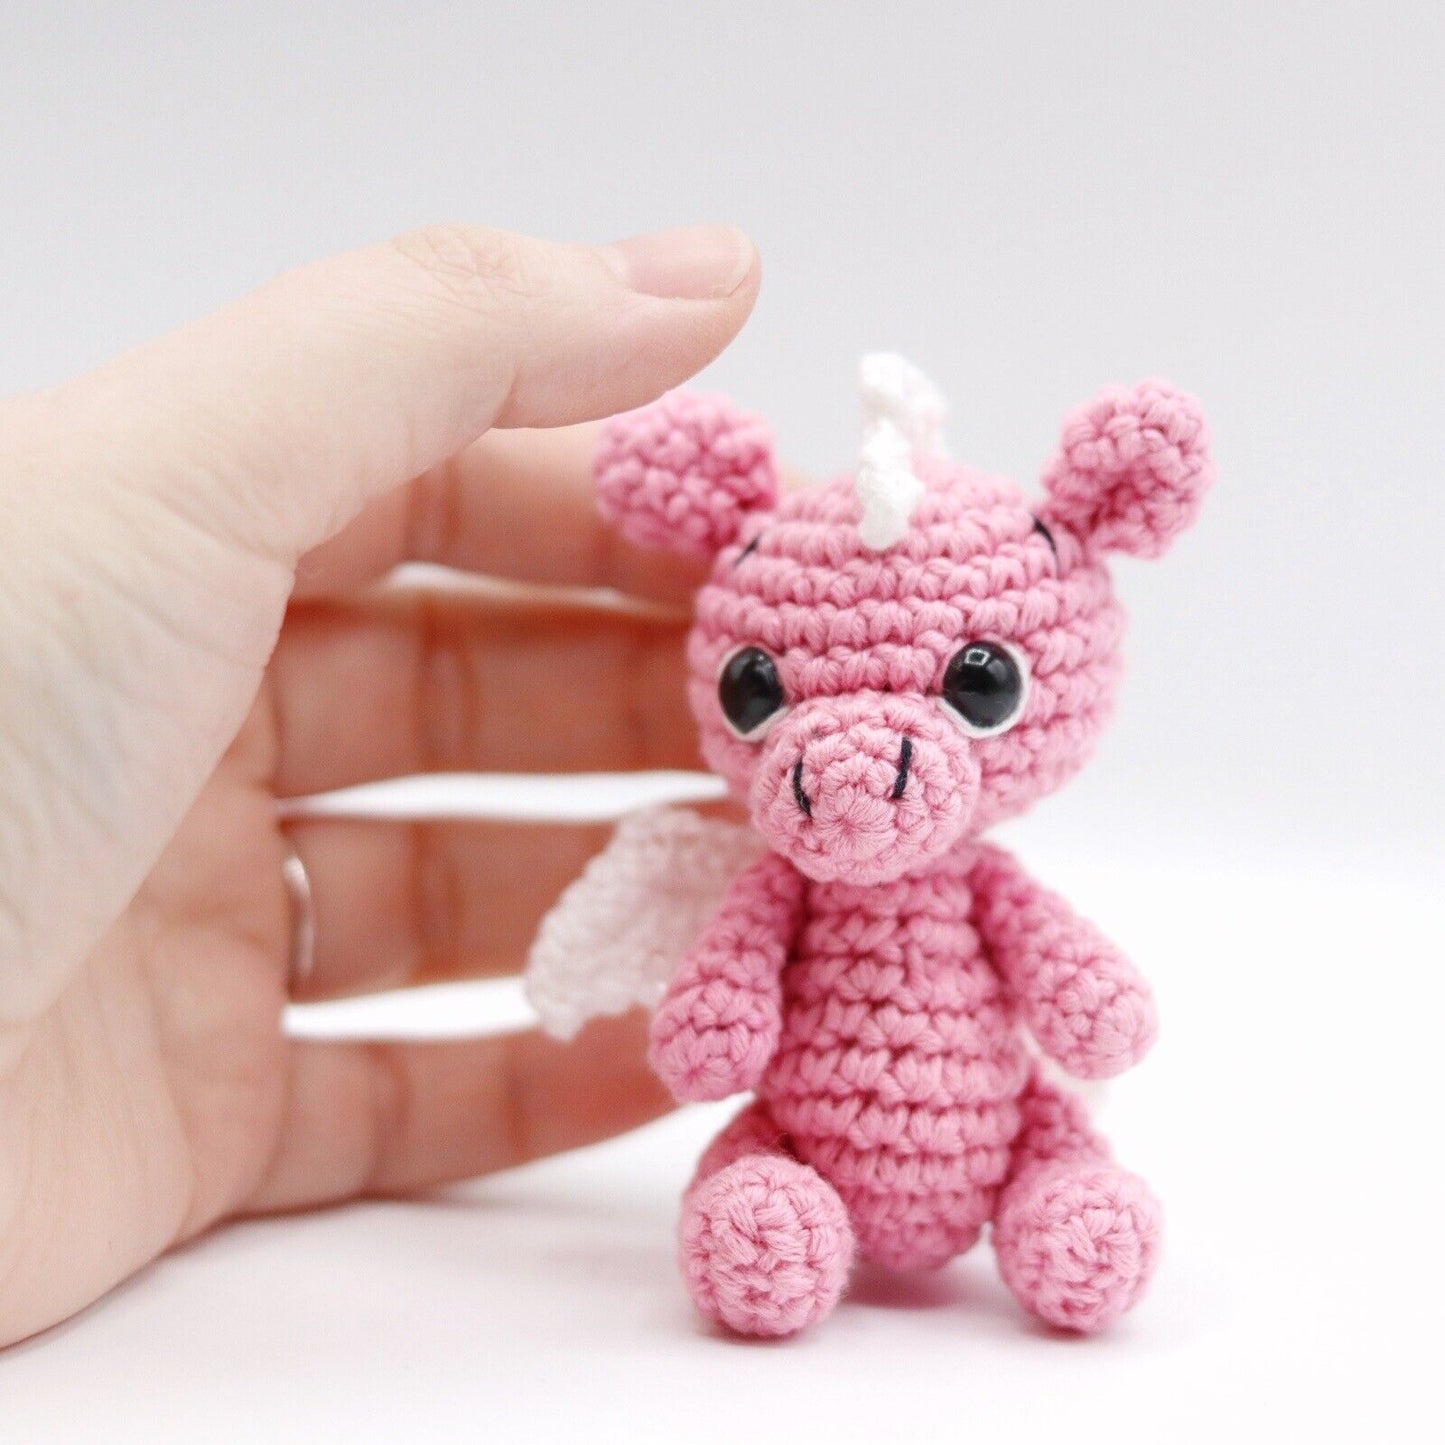 Handmade crochet small  dragon toy